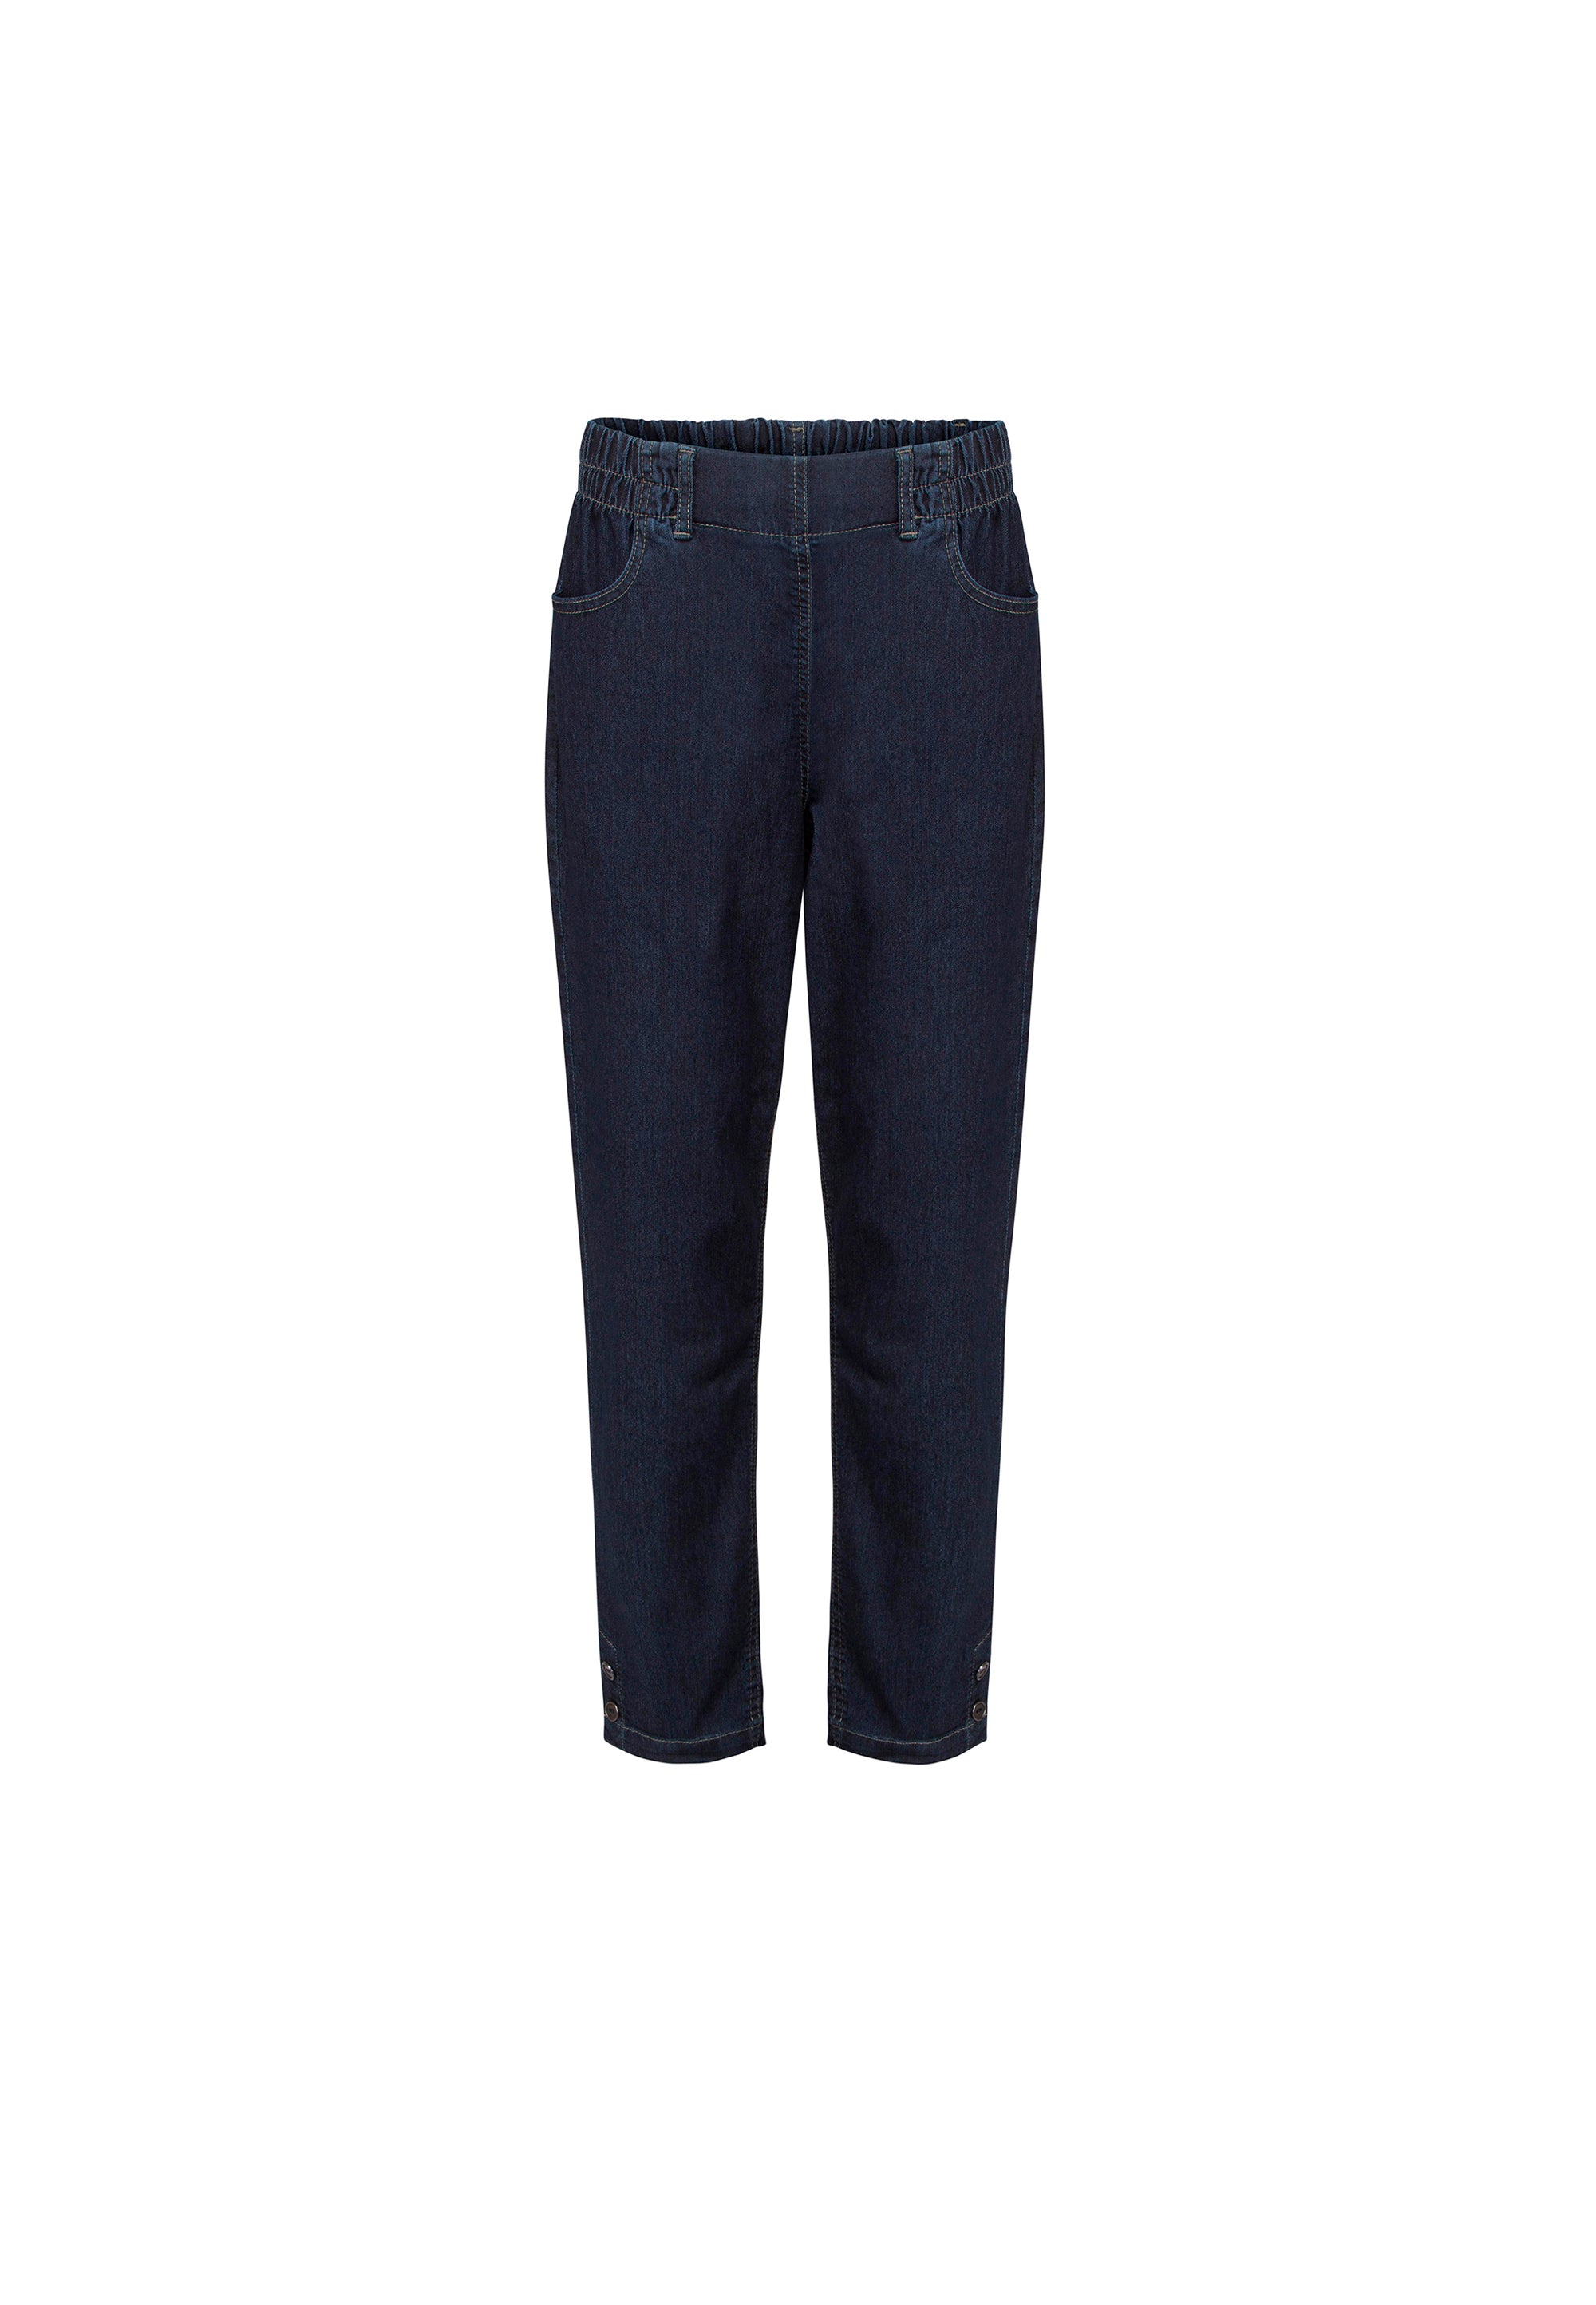 LAURIE  Ellie Relaxed - Short Length Trousers RELAXED 49501 Dark Blue Denim